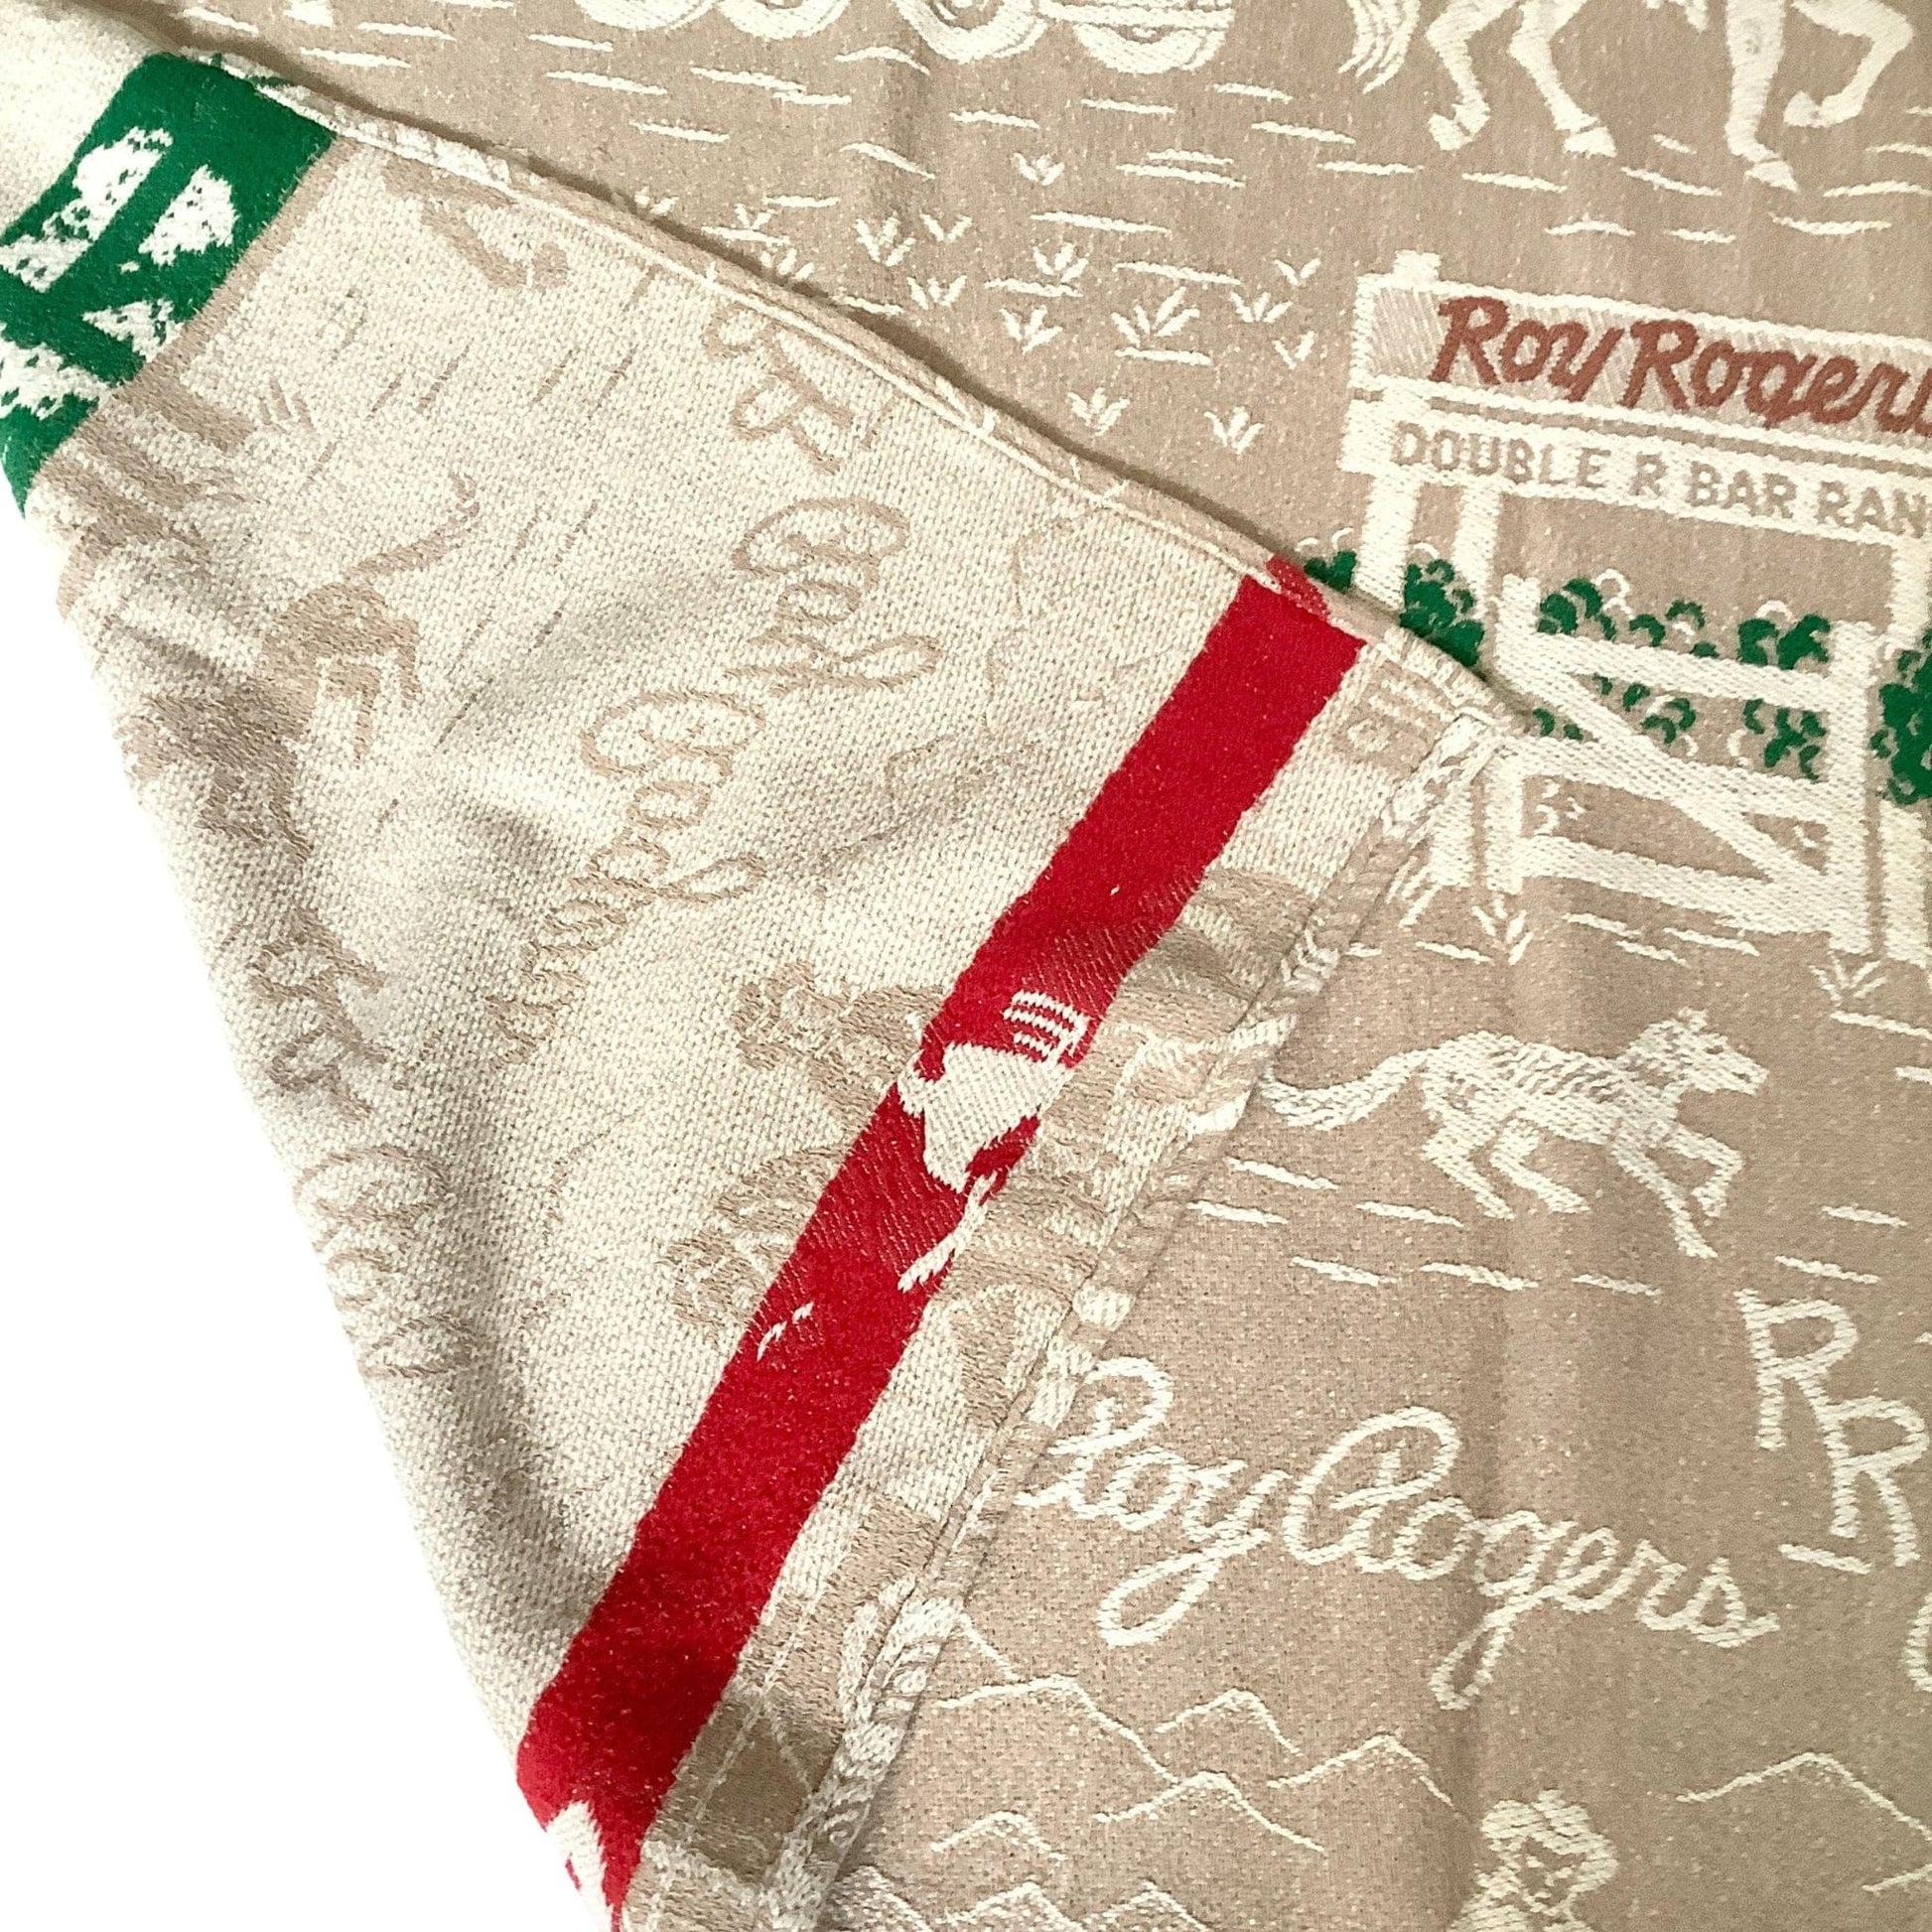 Roy Rogers Curtain Multi / Cotton / Vintage 1950s